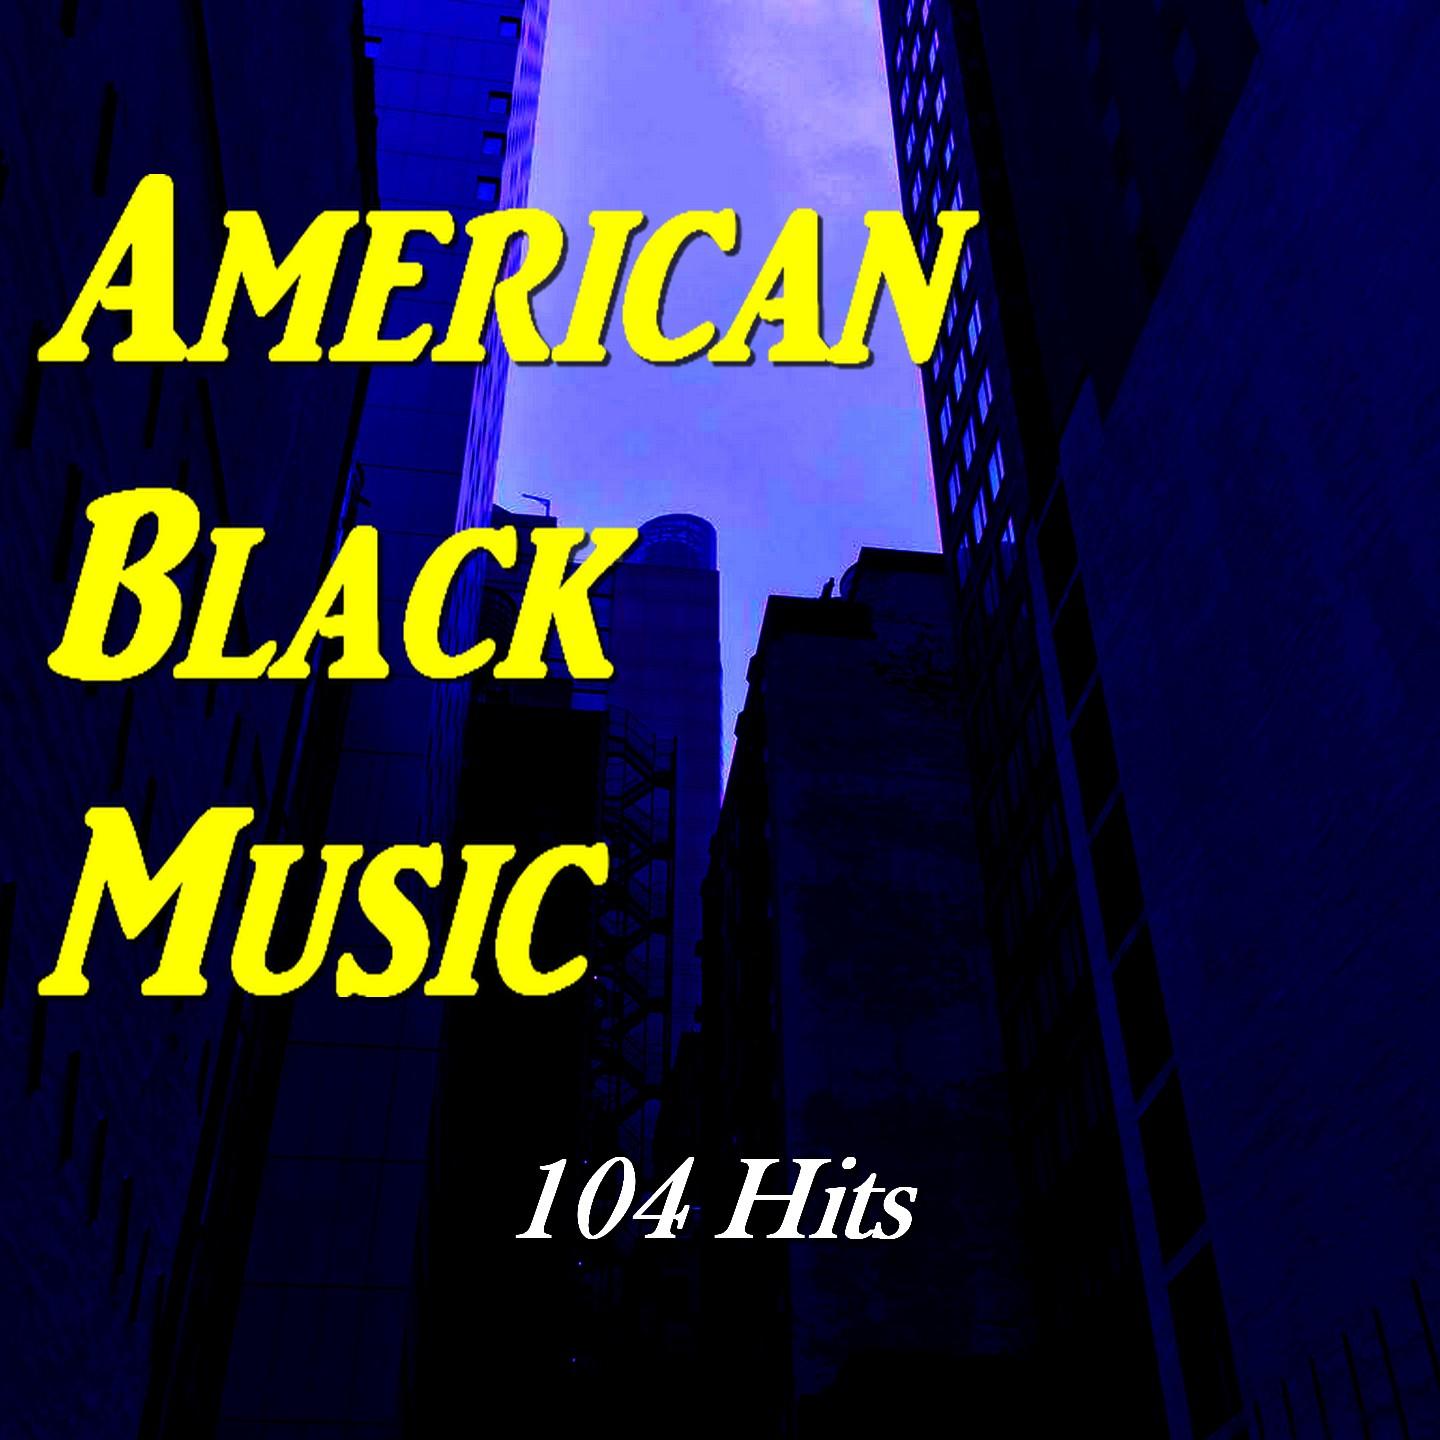 American Black Music (104 Hits)